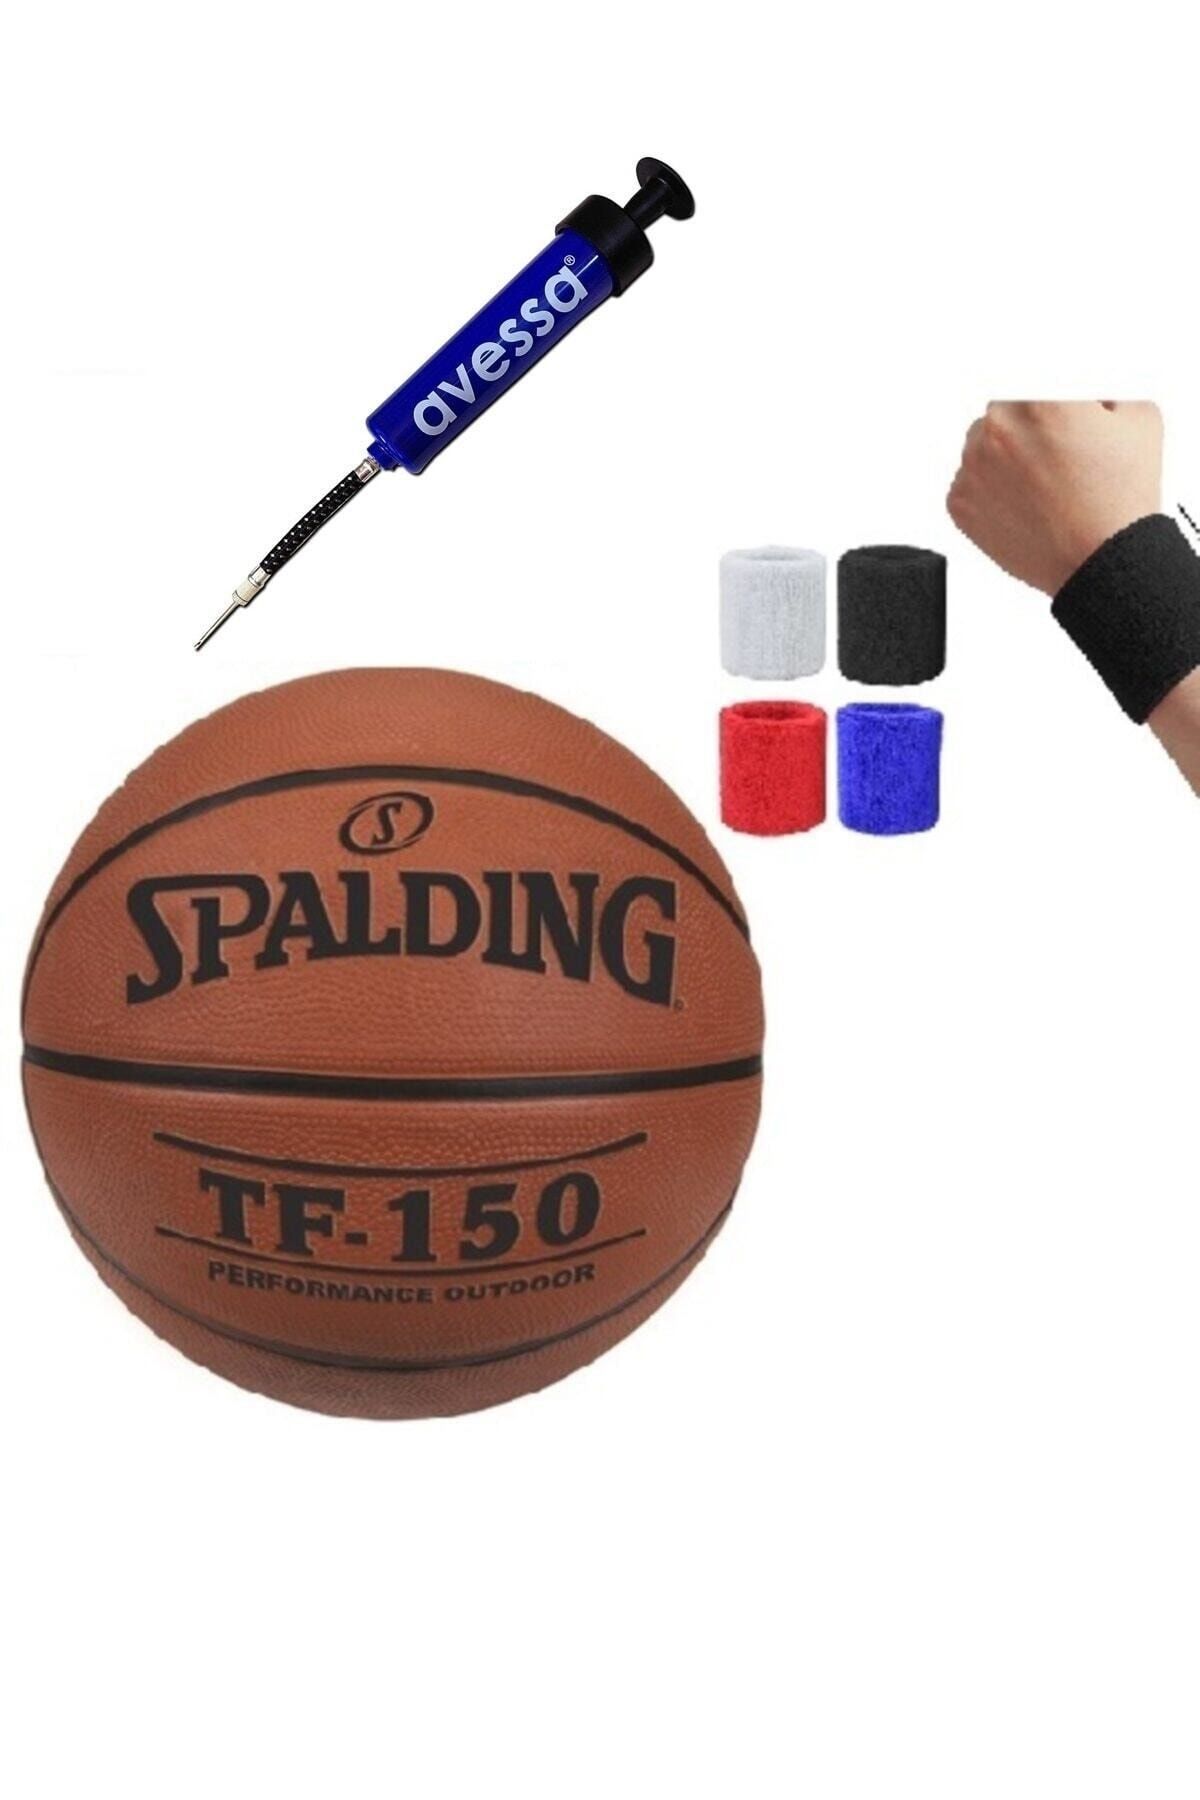 Spalding Tf-150 Basketbol Topu No: - 7 Numara + Pompa + Havlu Bileklik